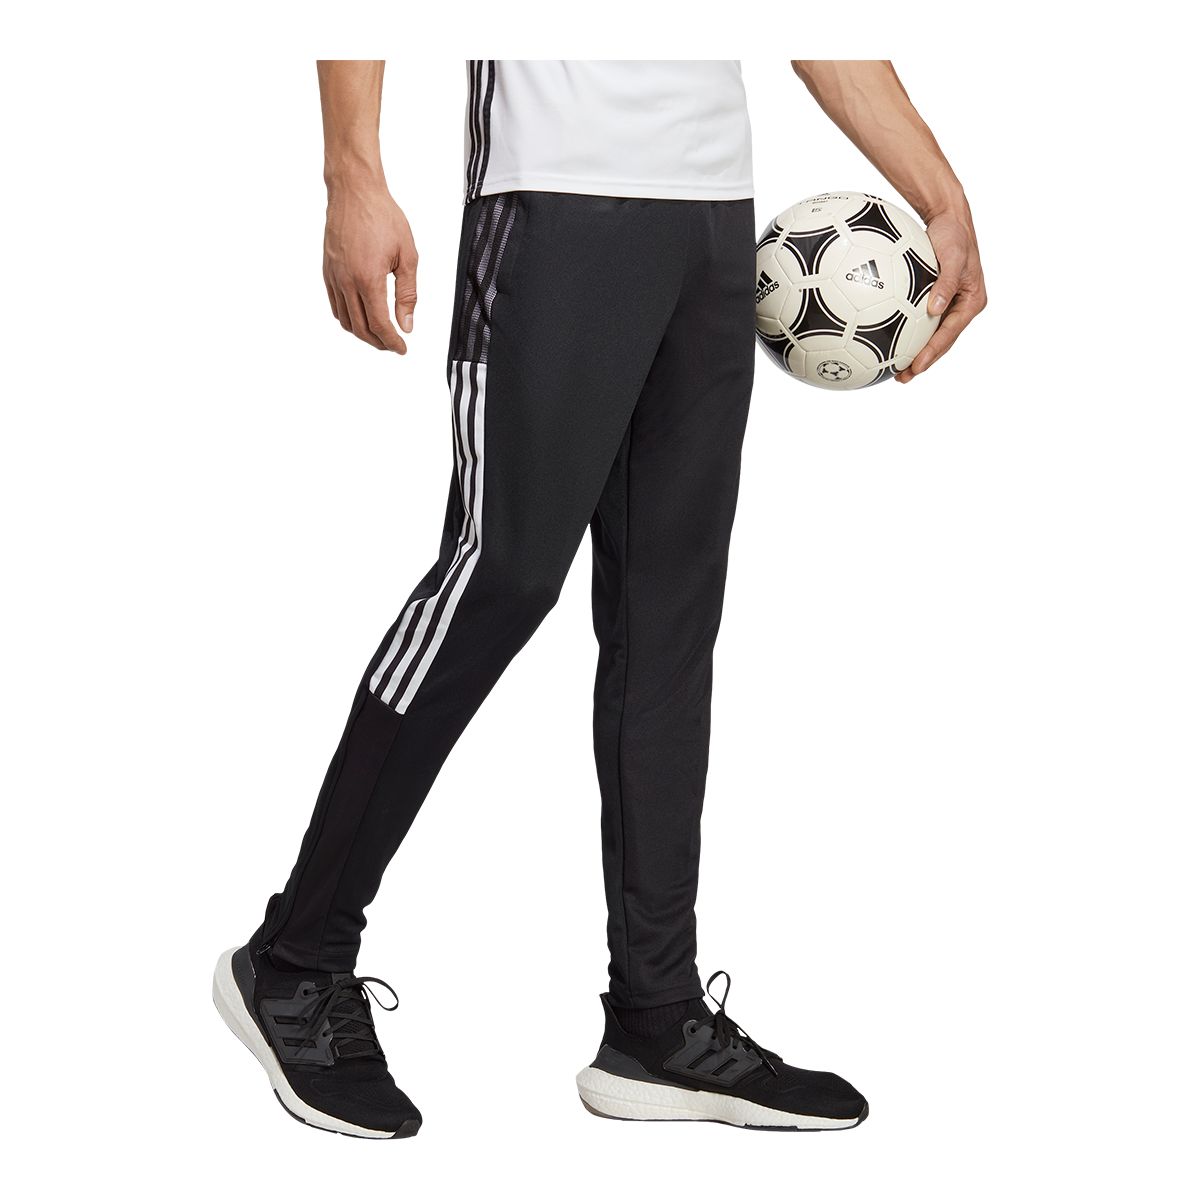 Adidas Track Pants Tiro Training Size Small for Sale in Yorba Linda